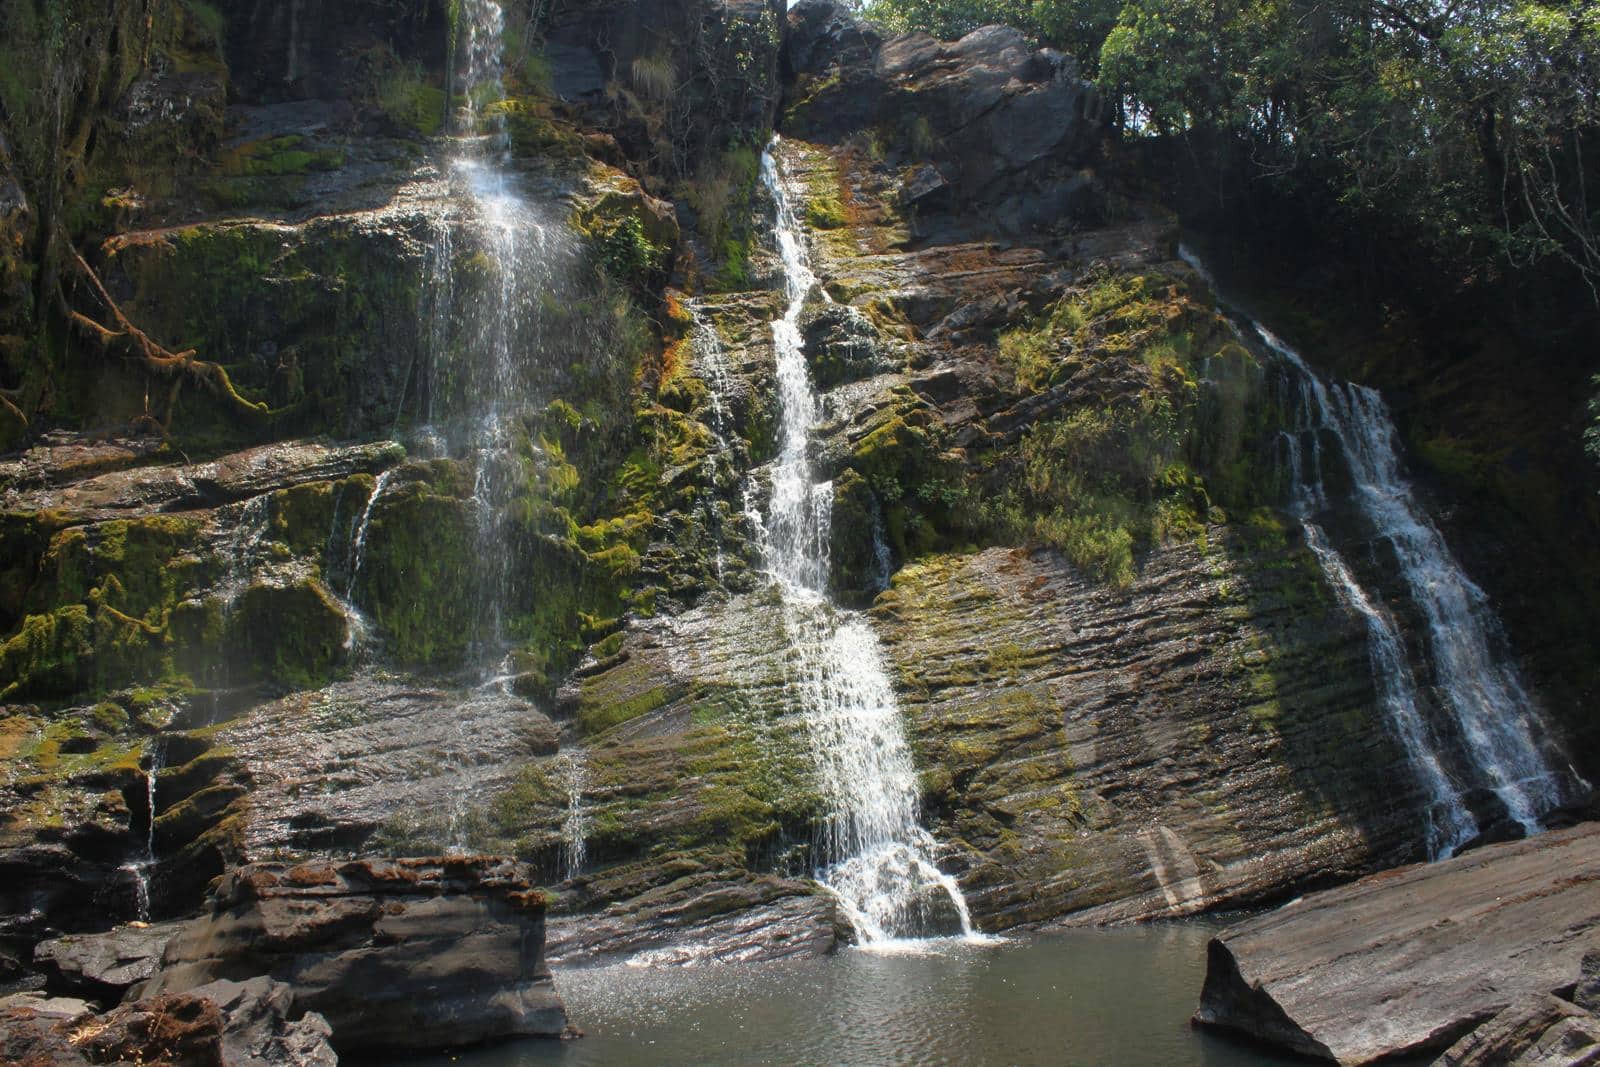 Nyambwezu is one of the many lesser known falls of Zambia.